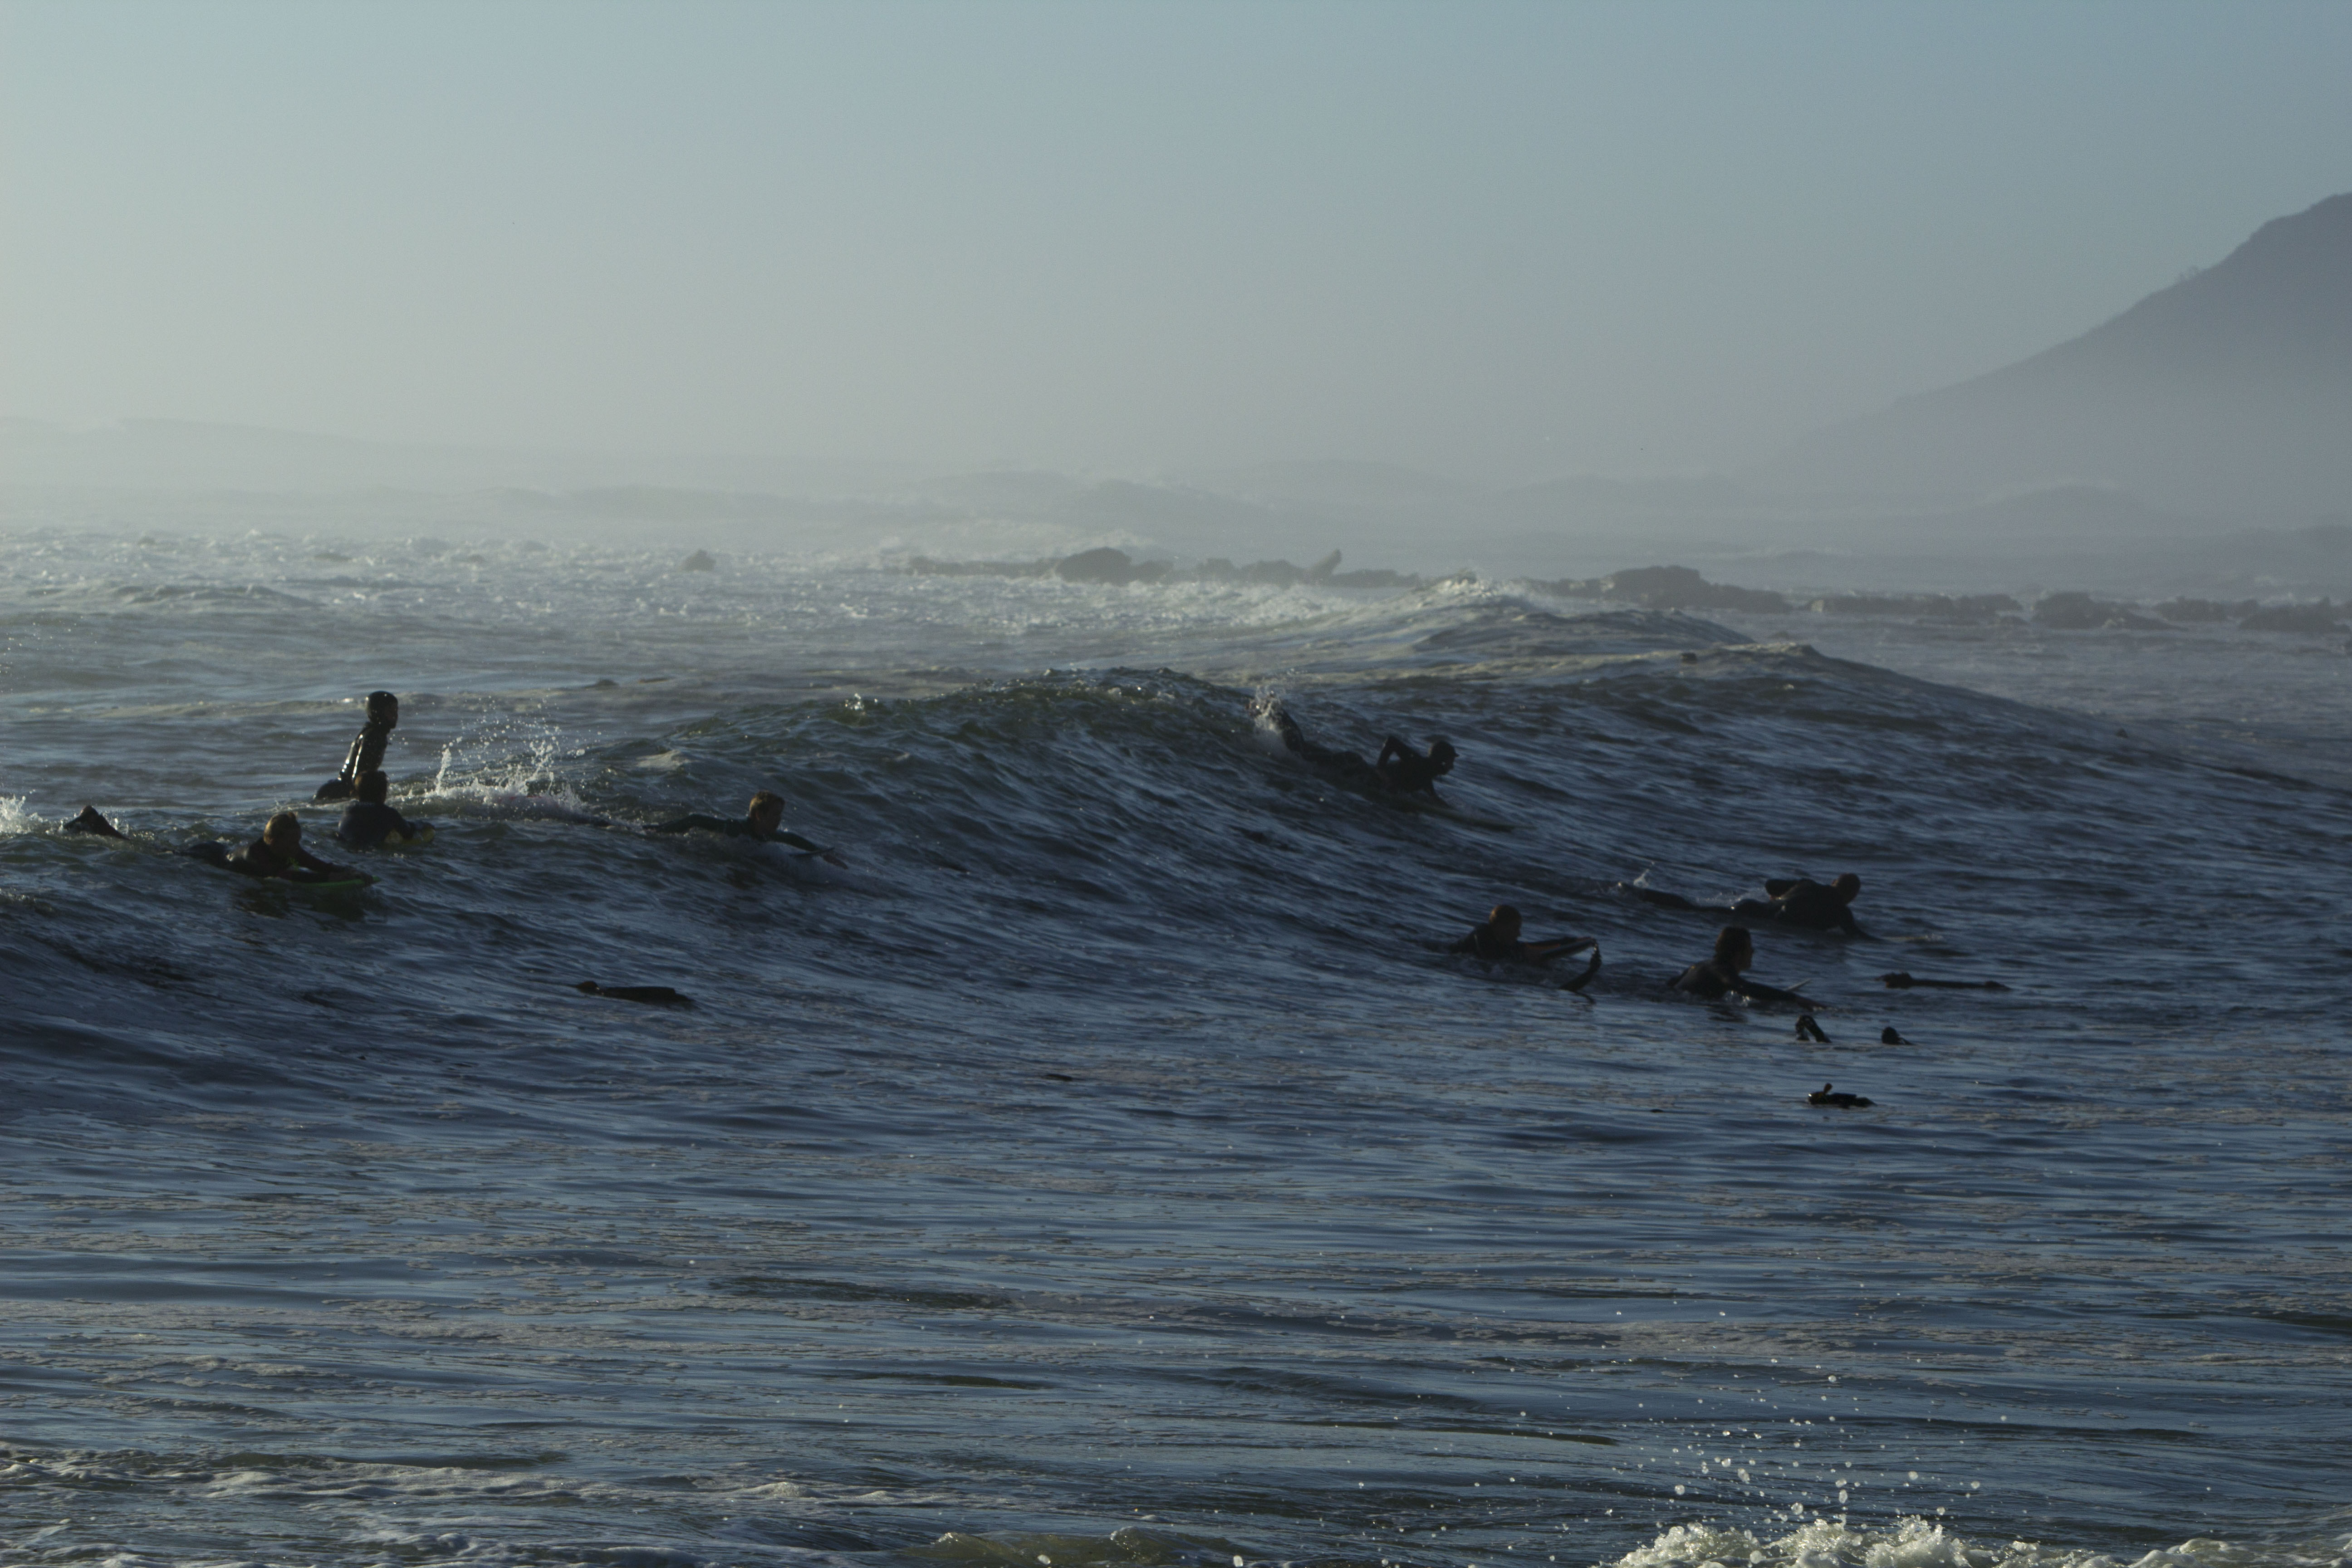 Surfs Up Spring Tide Cape Town